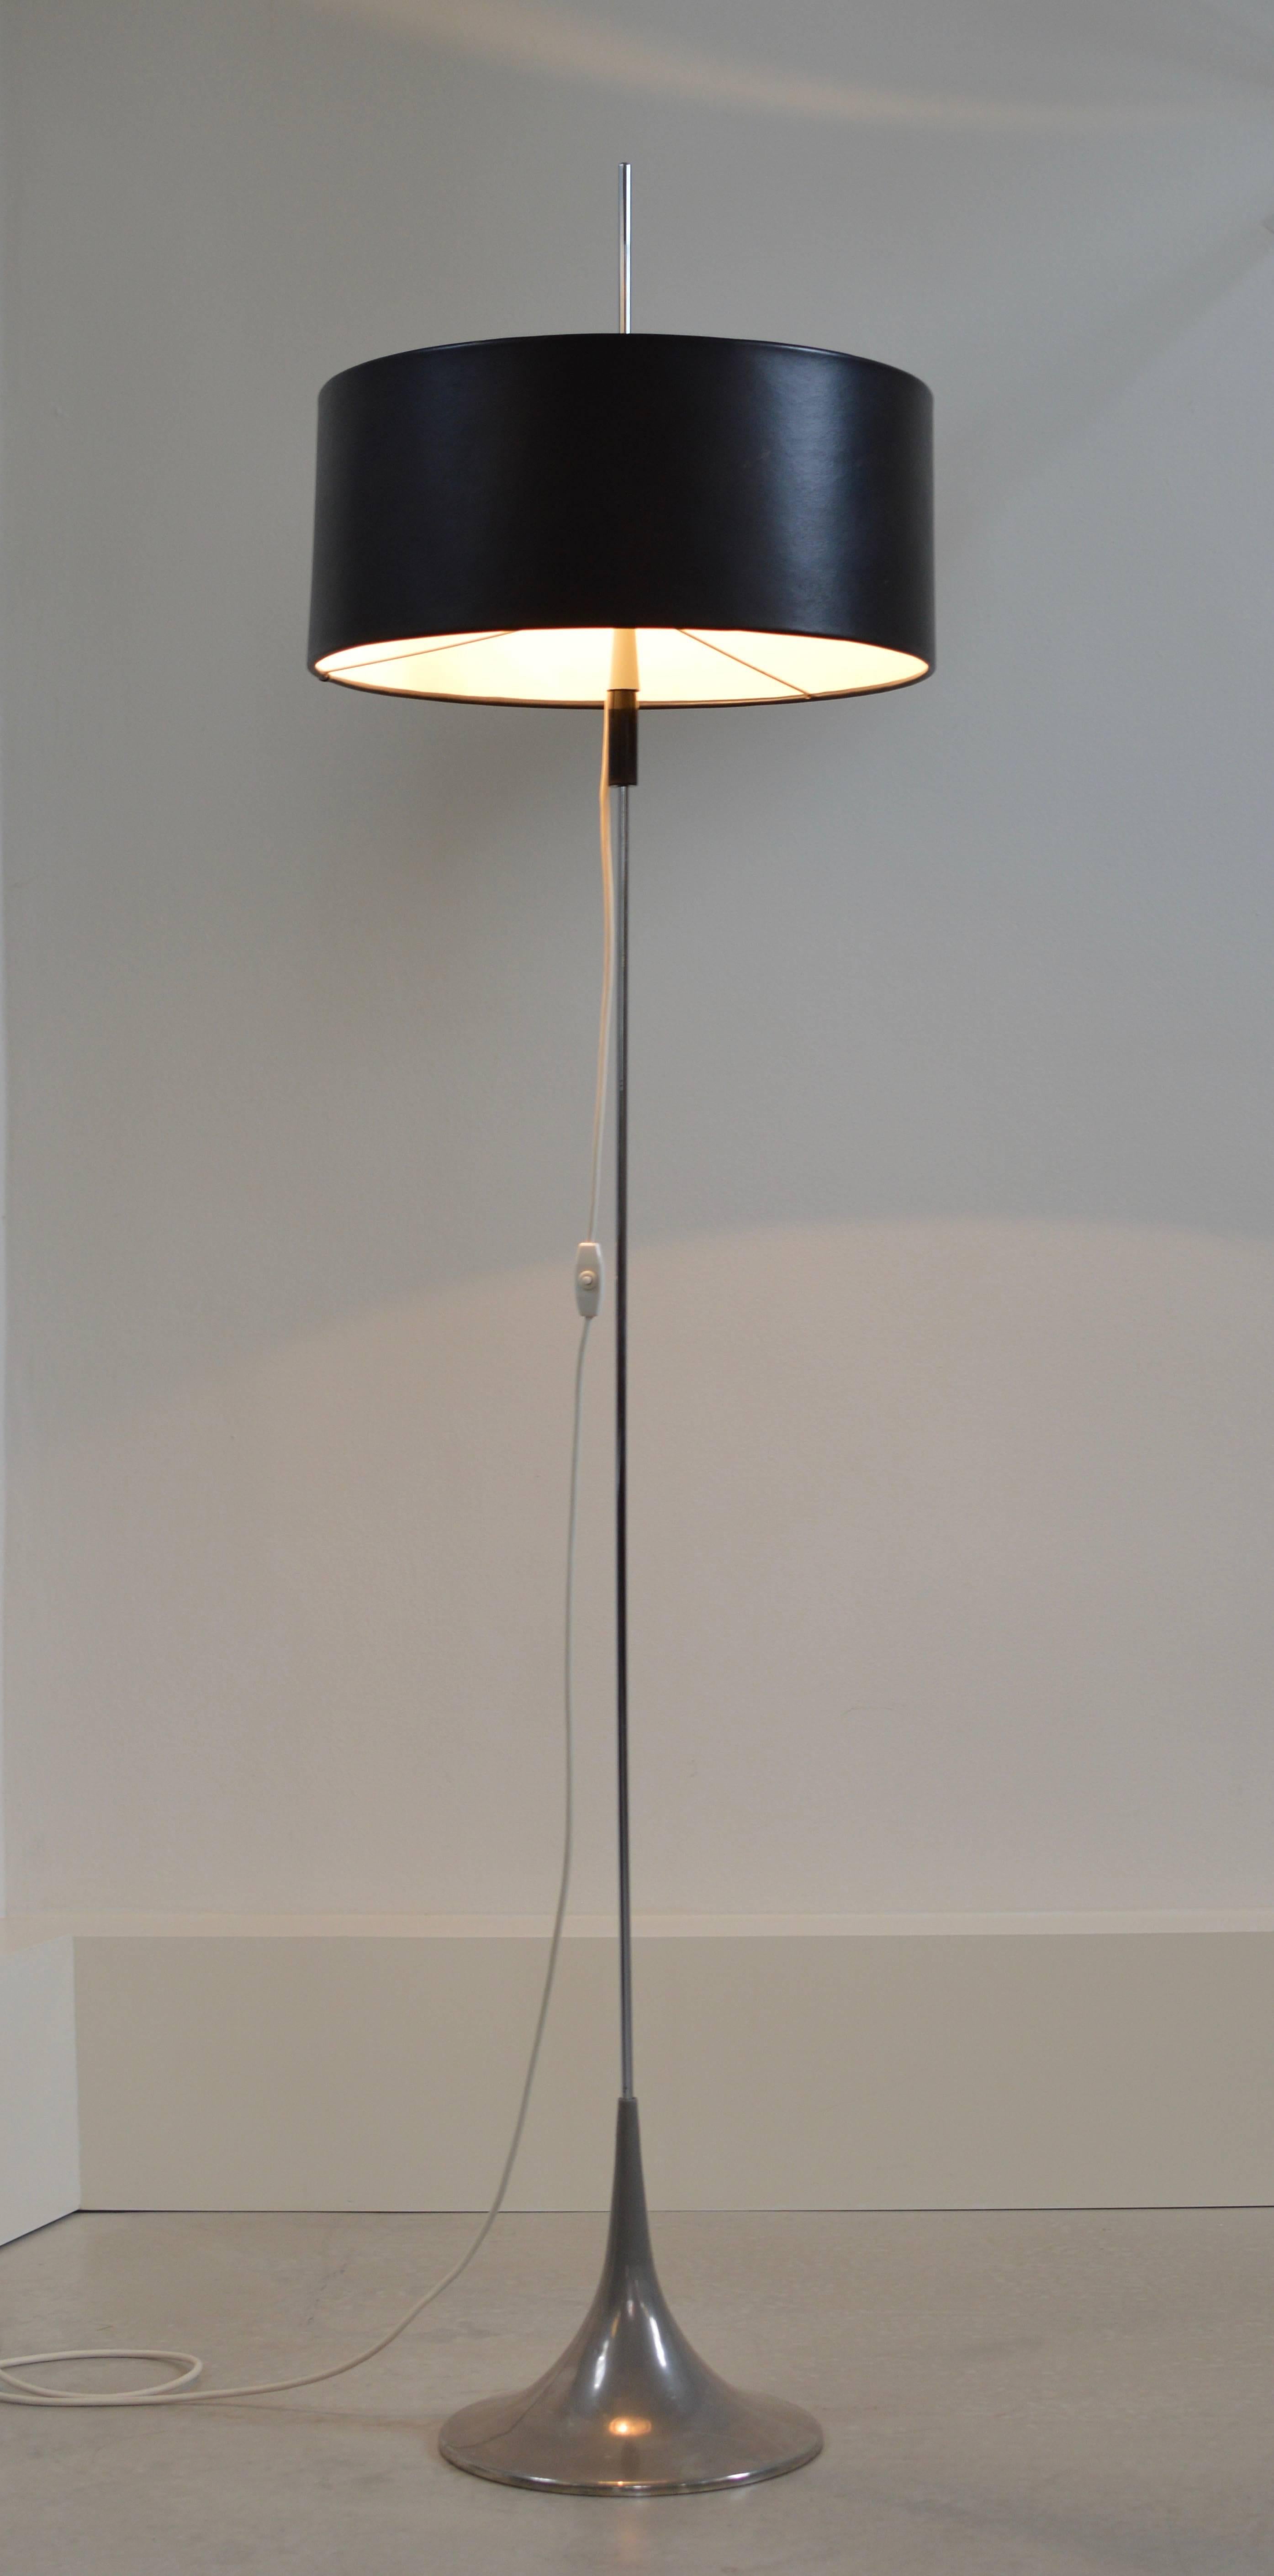 Refined floor lamp by German Designers Hans Jörg Walter and Josef Kuttner for Ruser & Kuntner Weil am Rhein, Germany, circa 1965 in wonderful all original condition.